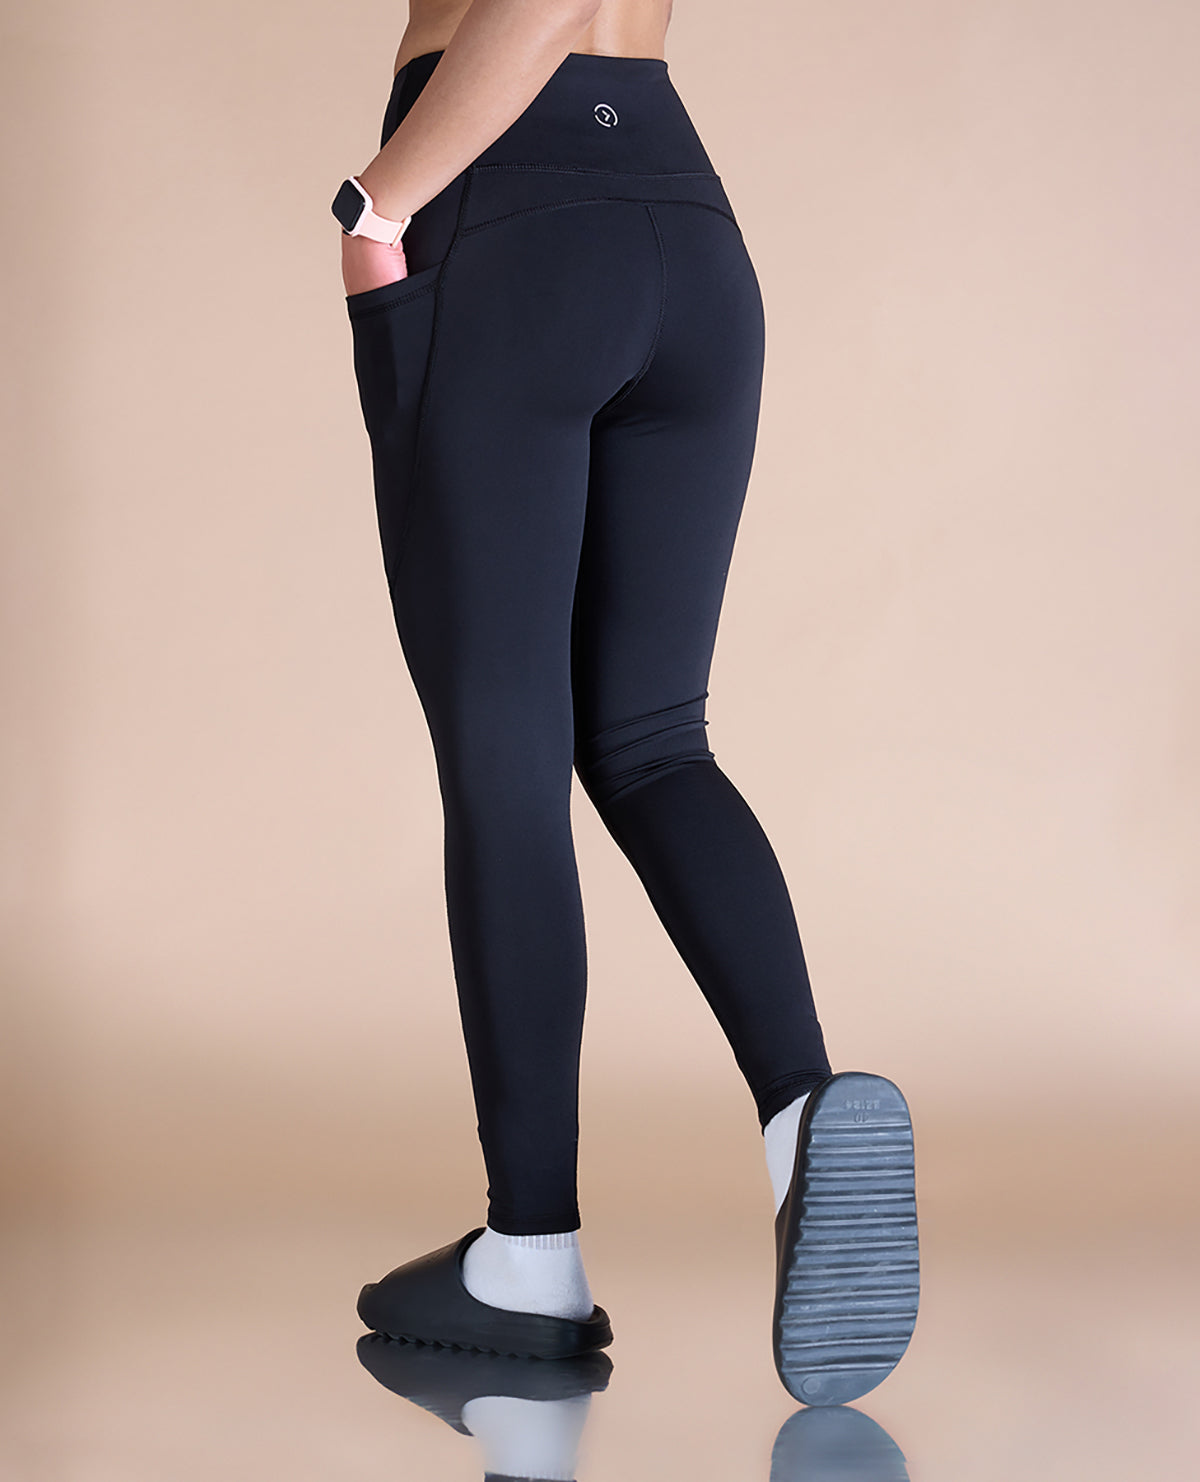 Avalanche® Nesika Active Tights - Women's Leggings in Black